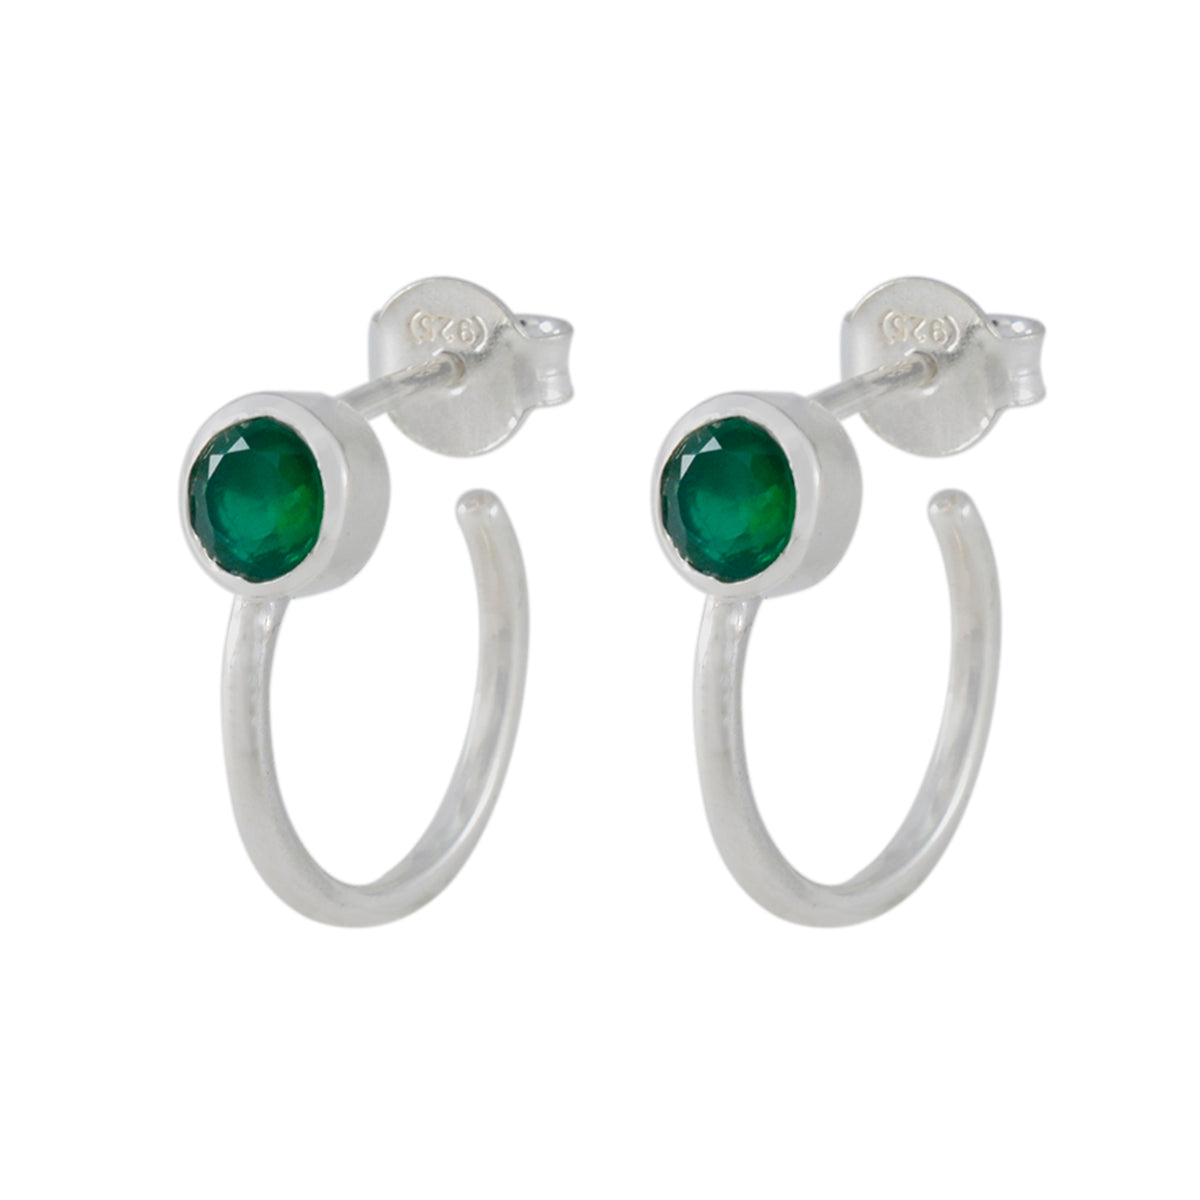 Riyo Wunderschöner 925er Sterlingsilber-Ohrring für Frau, indischer Smaragd-Ohrring, Lünettenfassung, grüner Ohrring-Ohrstecker